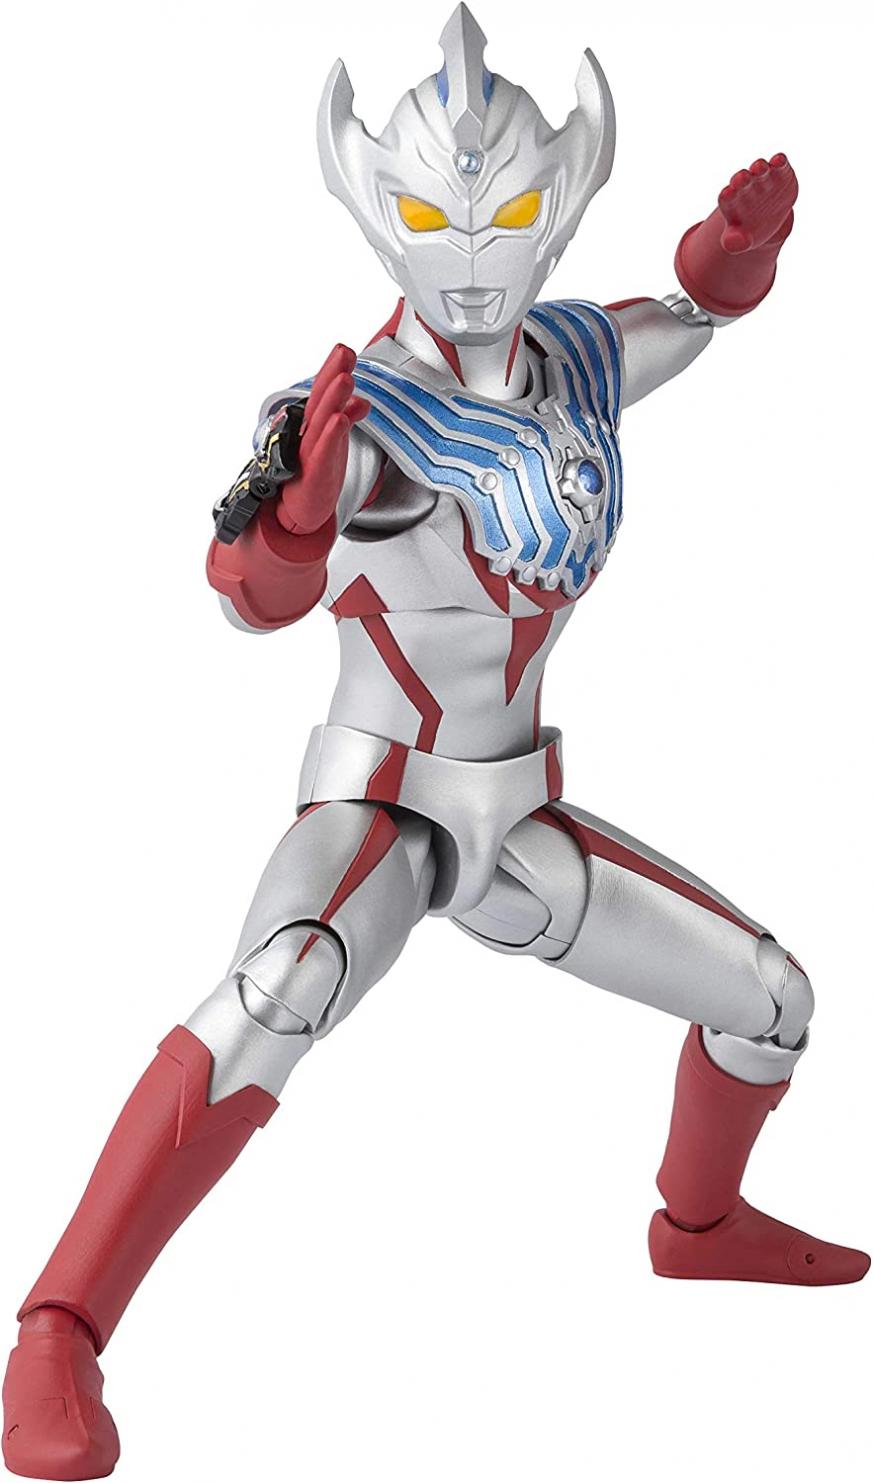 TAMASHII NATIONS Bandai S.H.Figuarts Ultraman Taiga